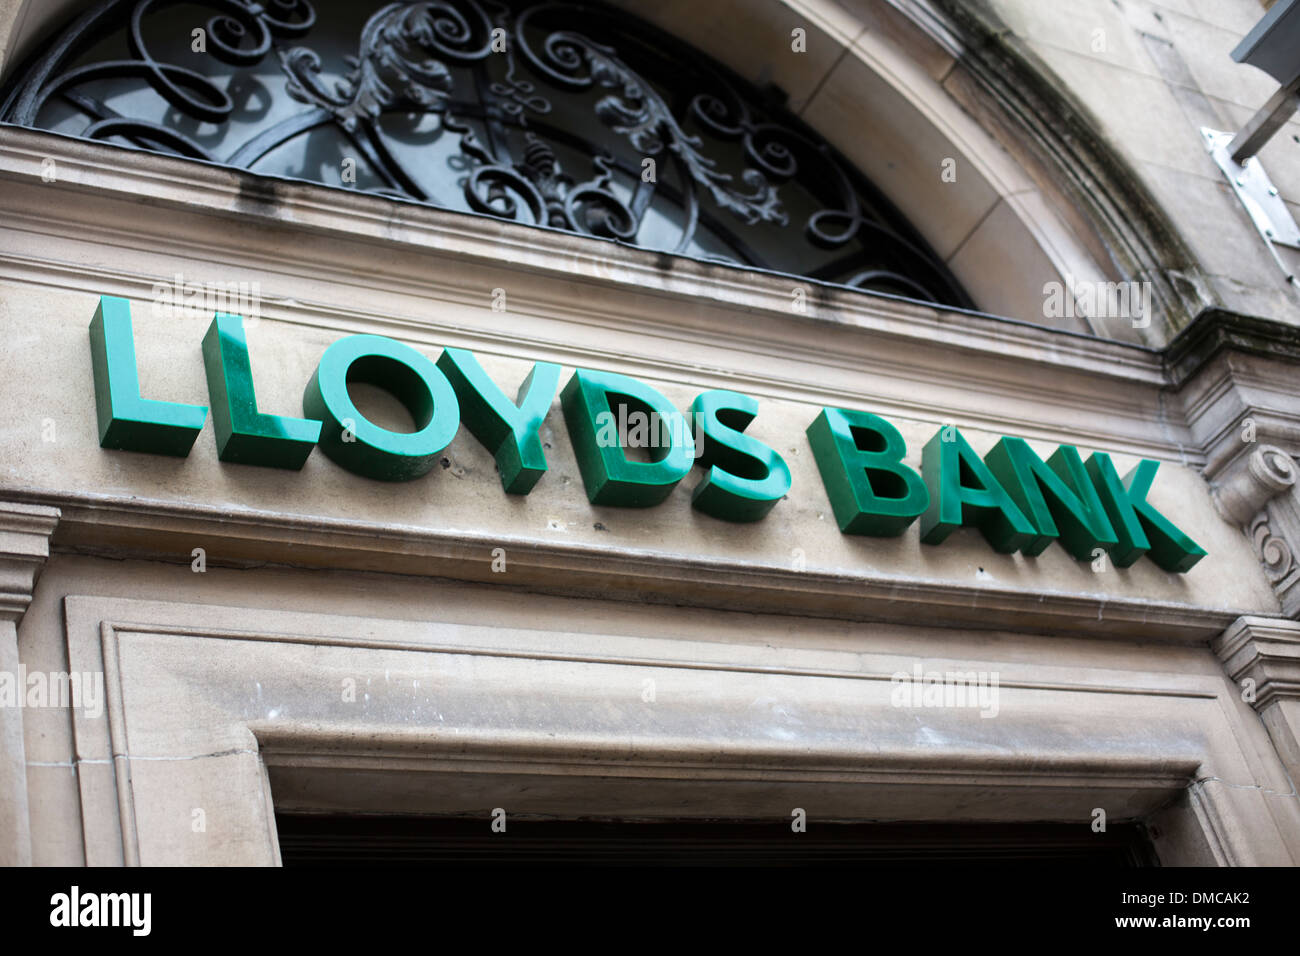 Lloyds Bank sign over bank entrance Stock Photo